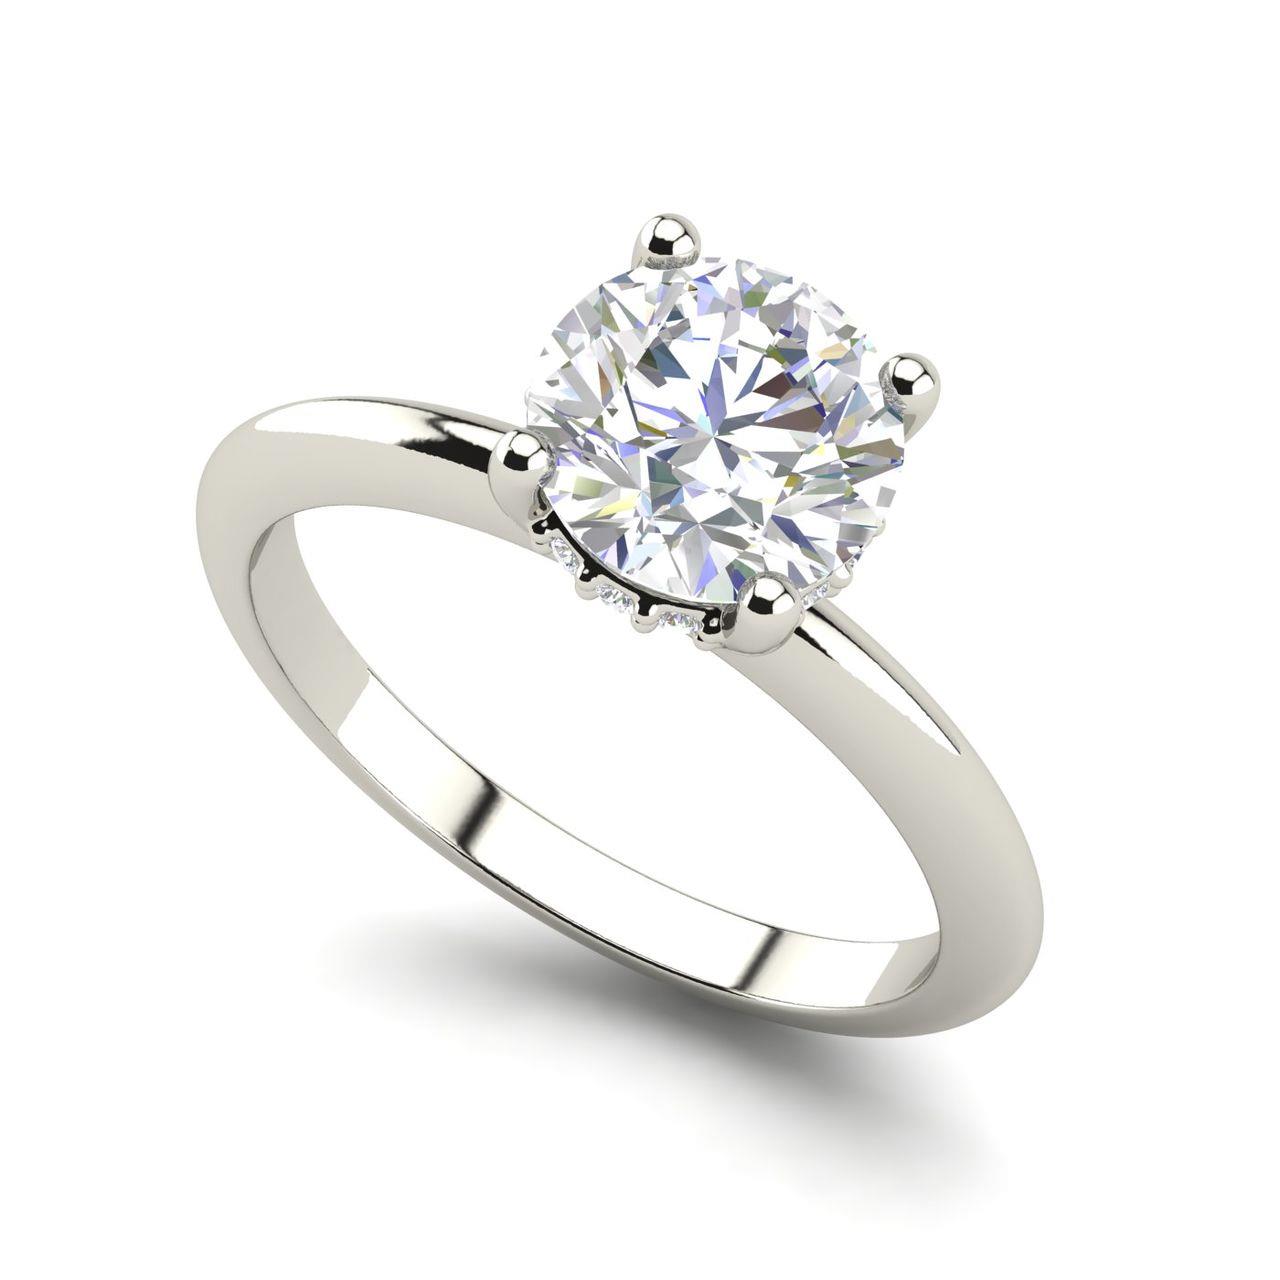 Solitaire 1.3 Carat Round Cut Diamond Engagement Ring